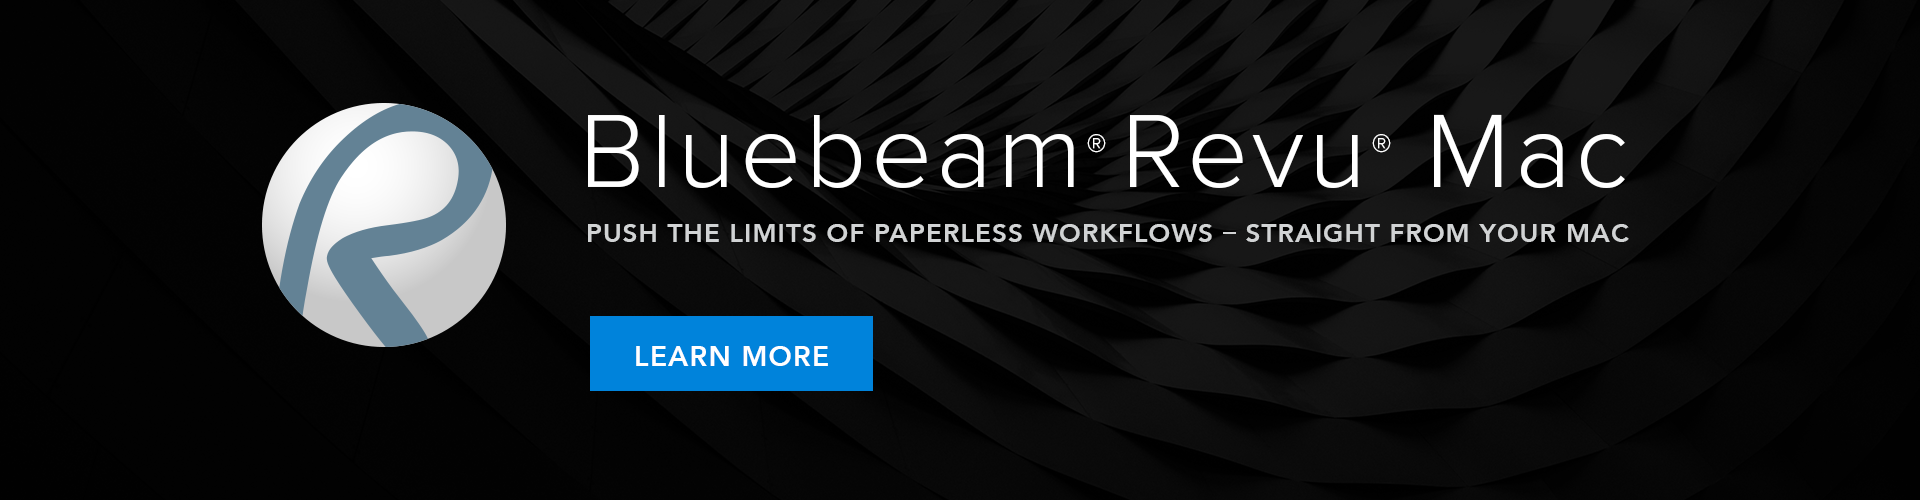 bluebeam revu for mac download